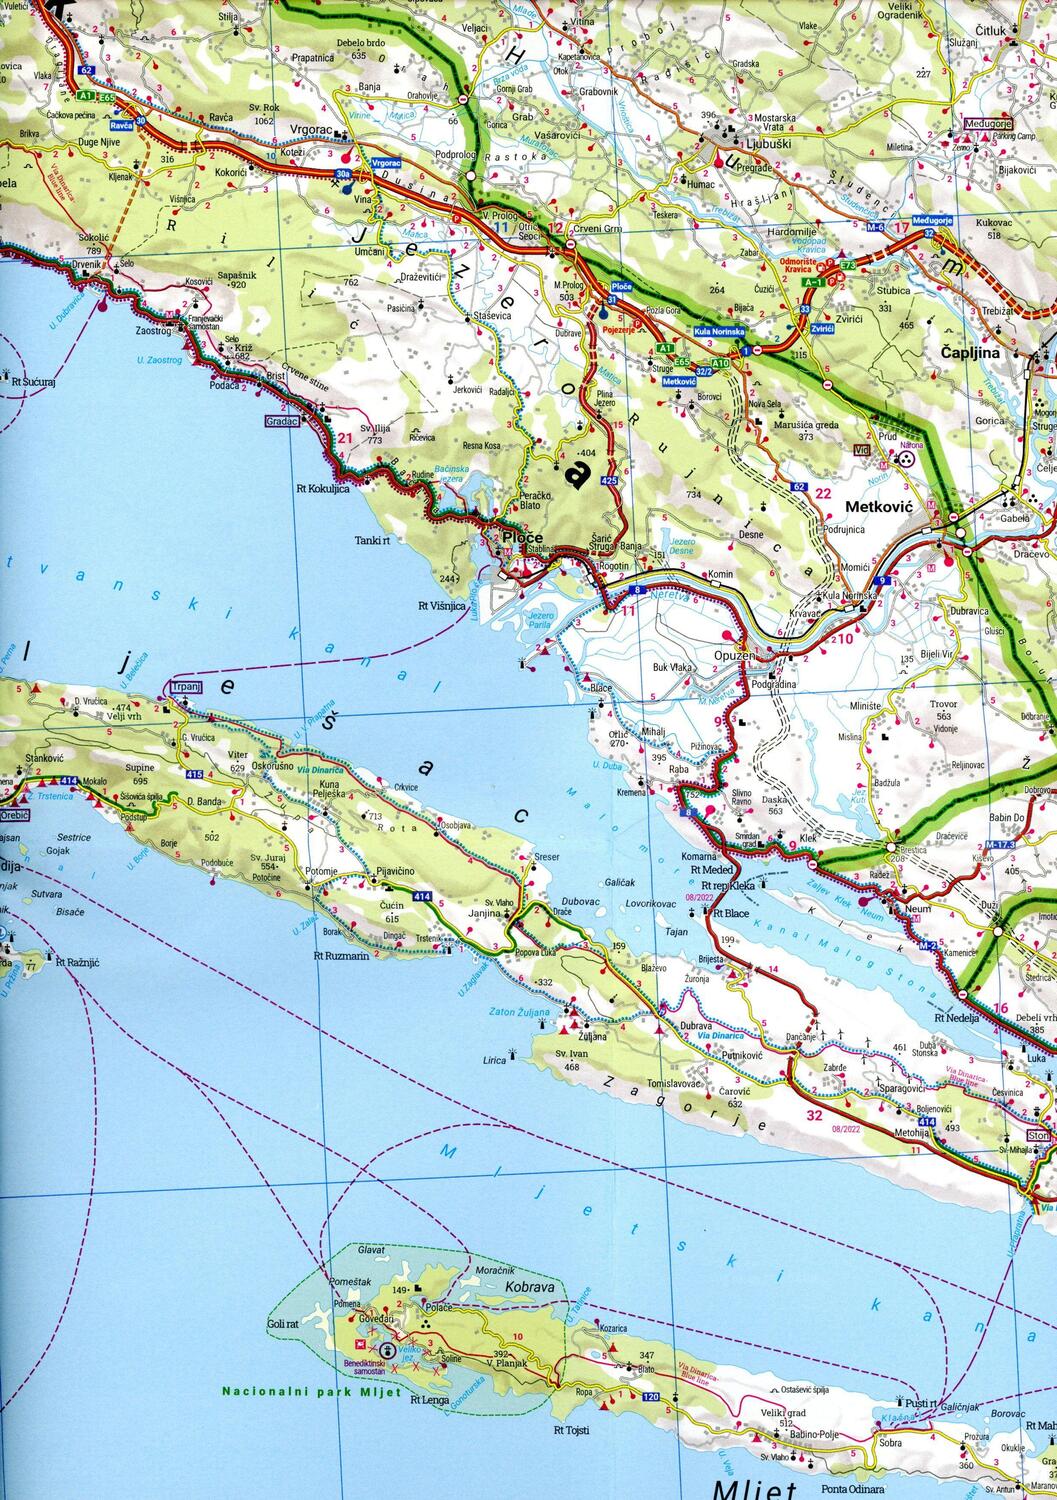 Bild: 9783707919783 | Kroatien, Straßenkarten-Set 1:200.000, freytag & berndt | (Land-)Karte